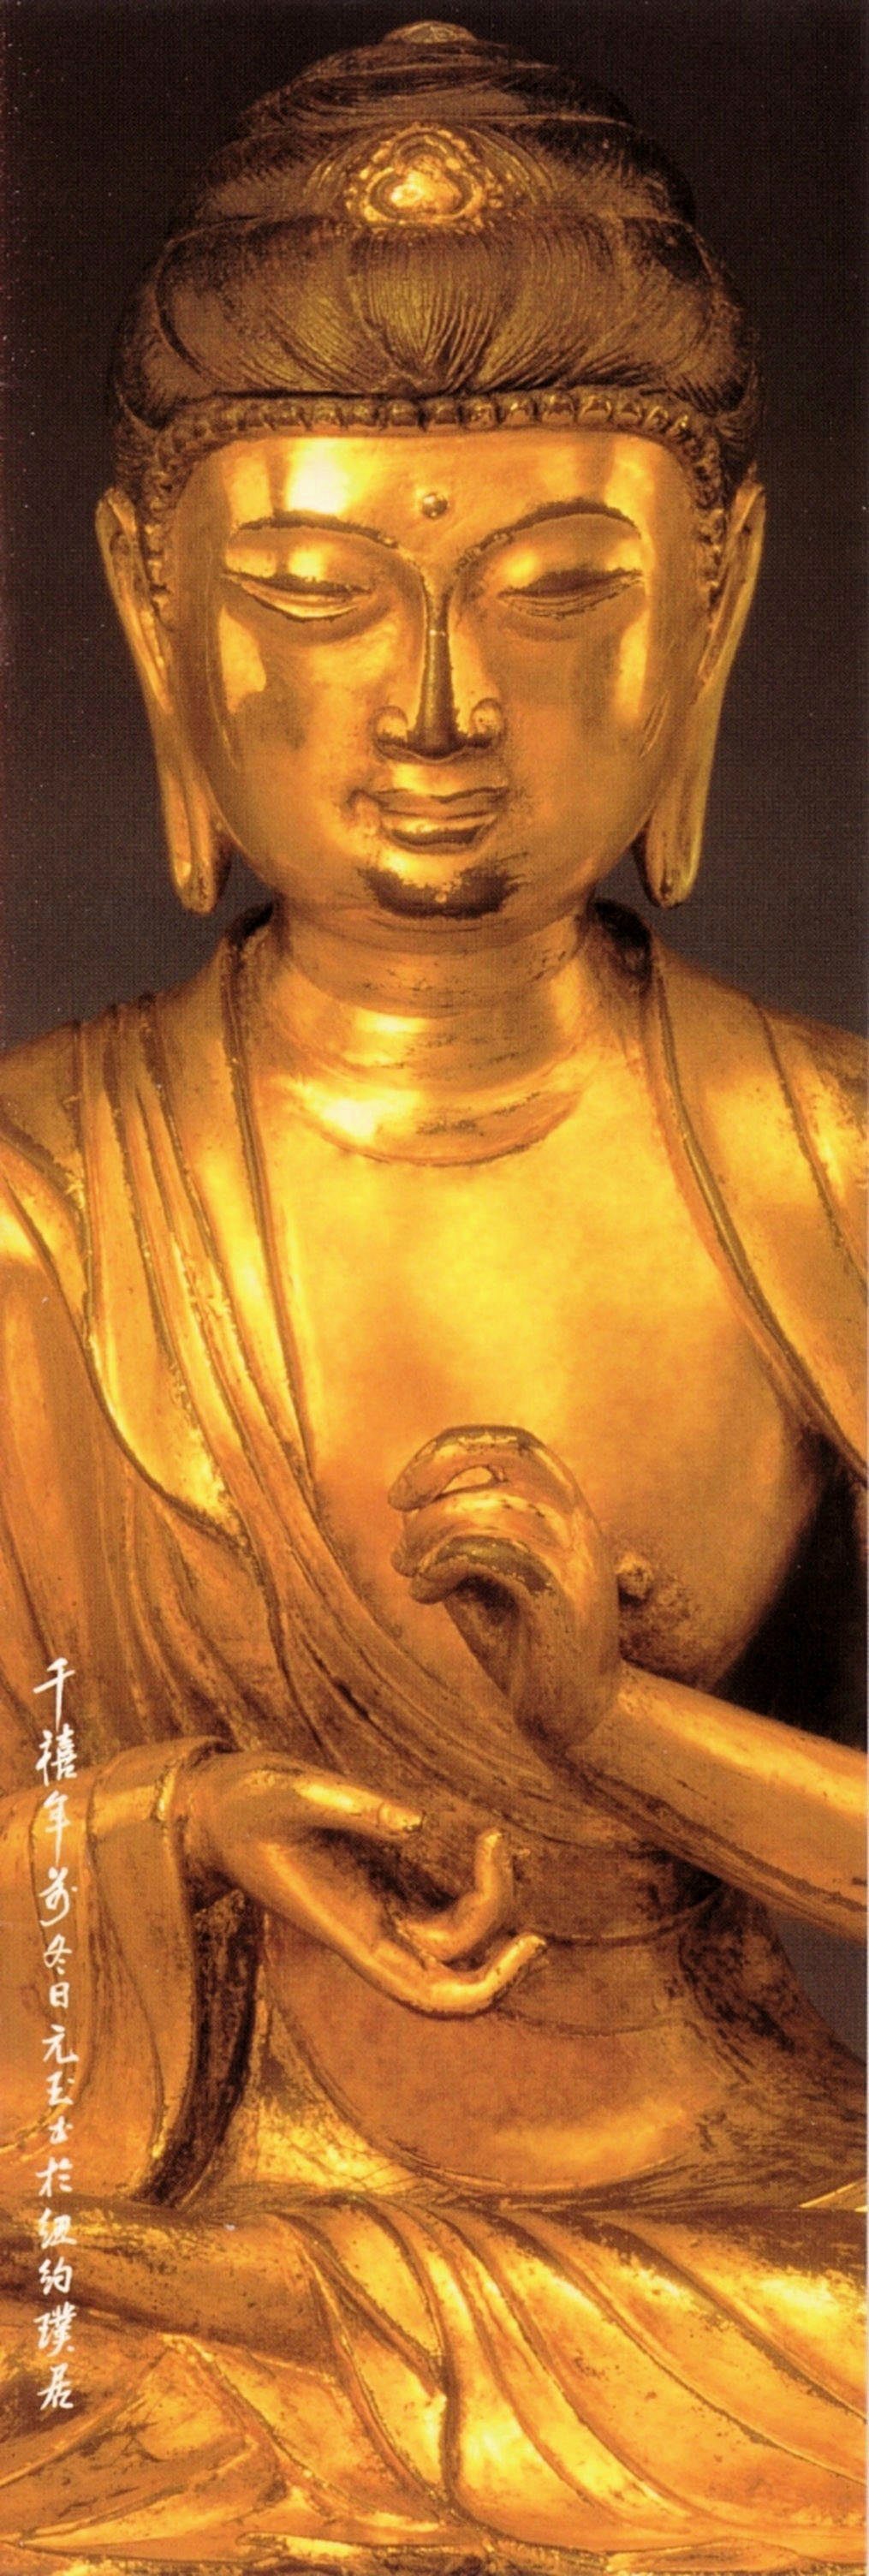 my home Artprint Boeddha (1 stuk)